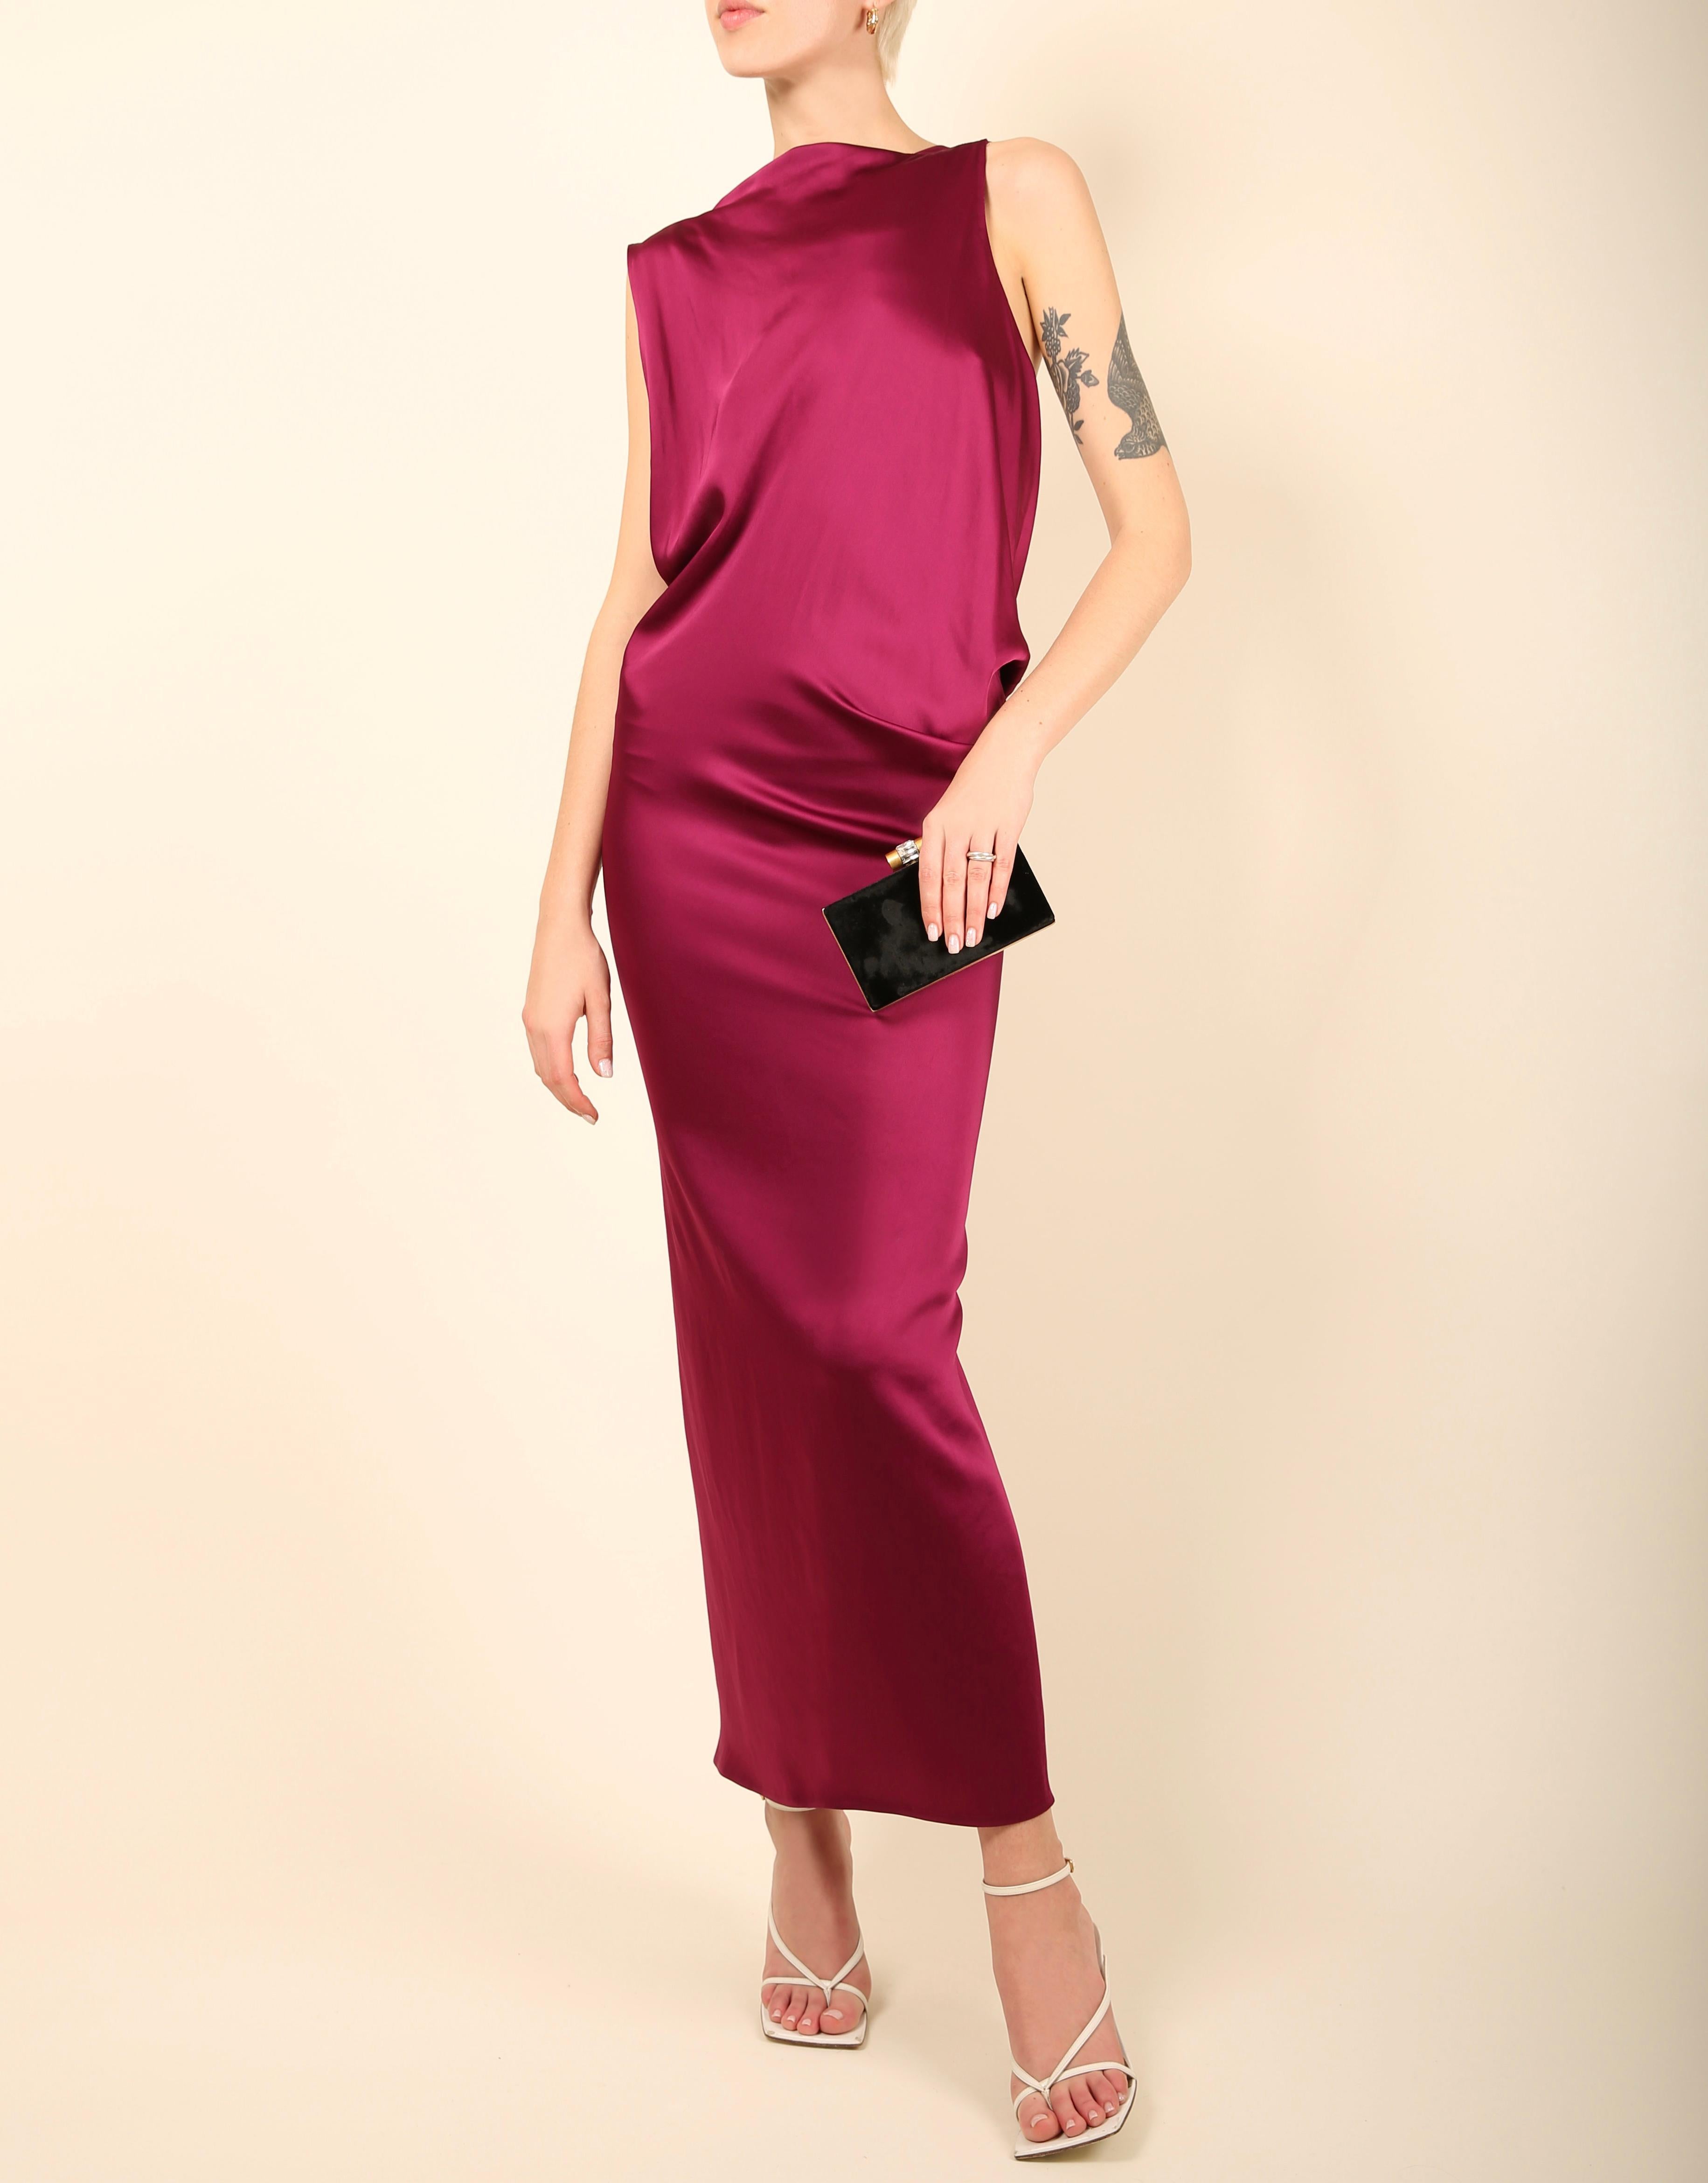 stella mccartney purple dress